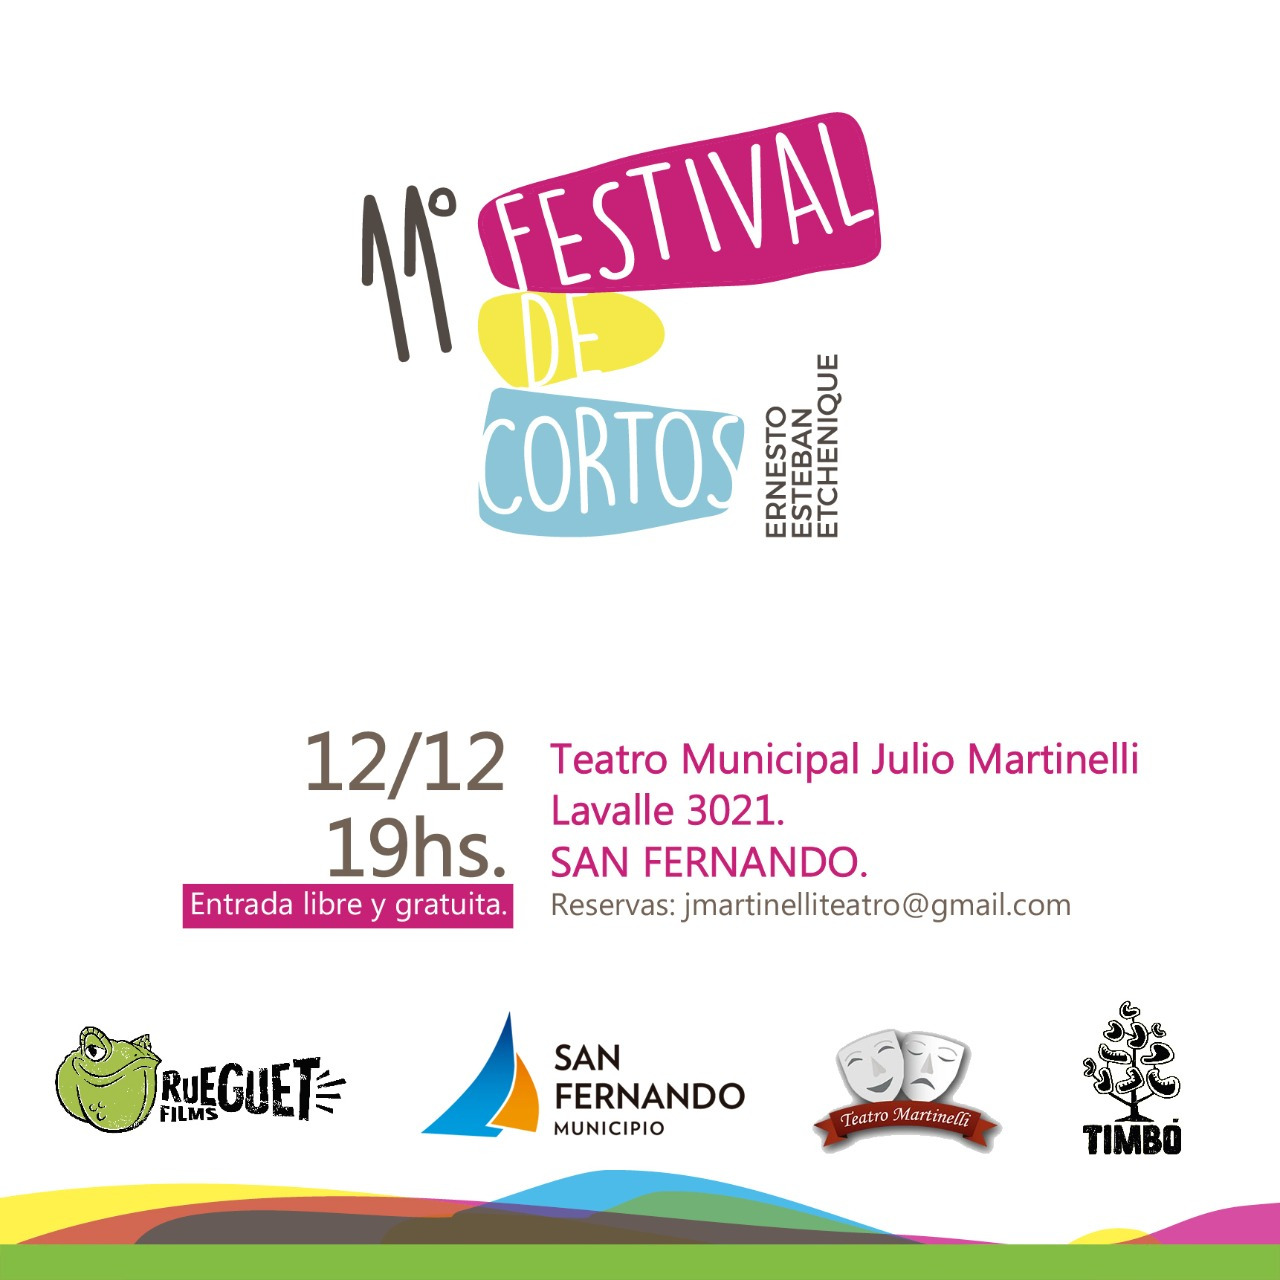 Festival de cortos Teatro Martinelli